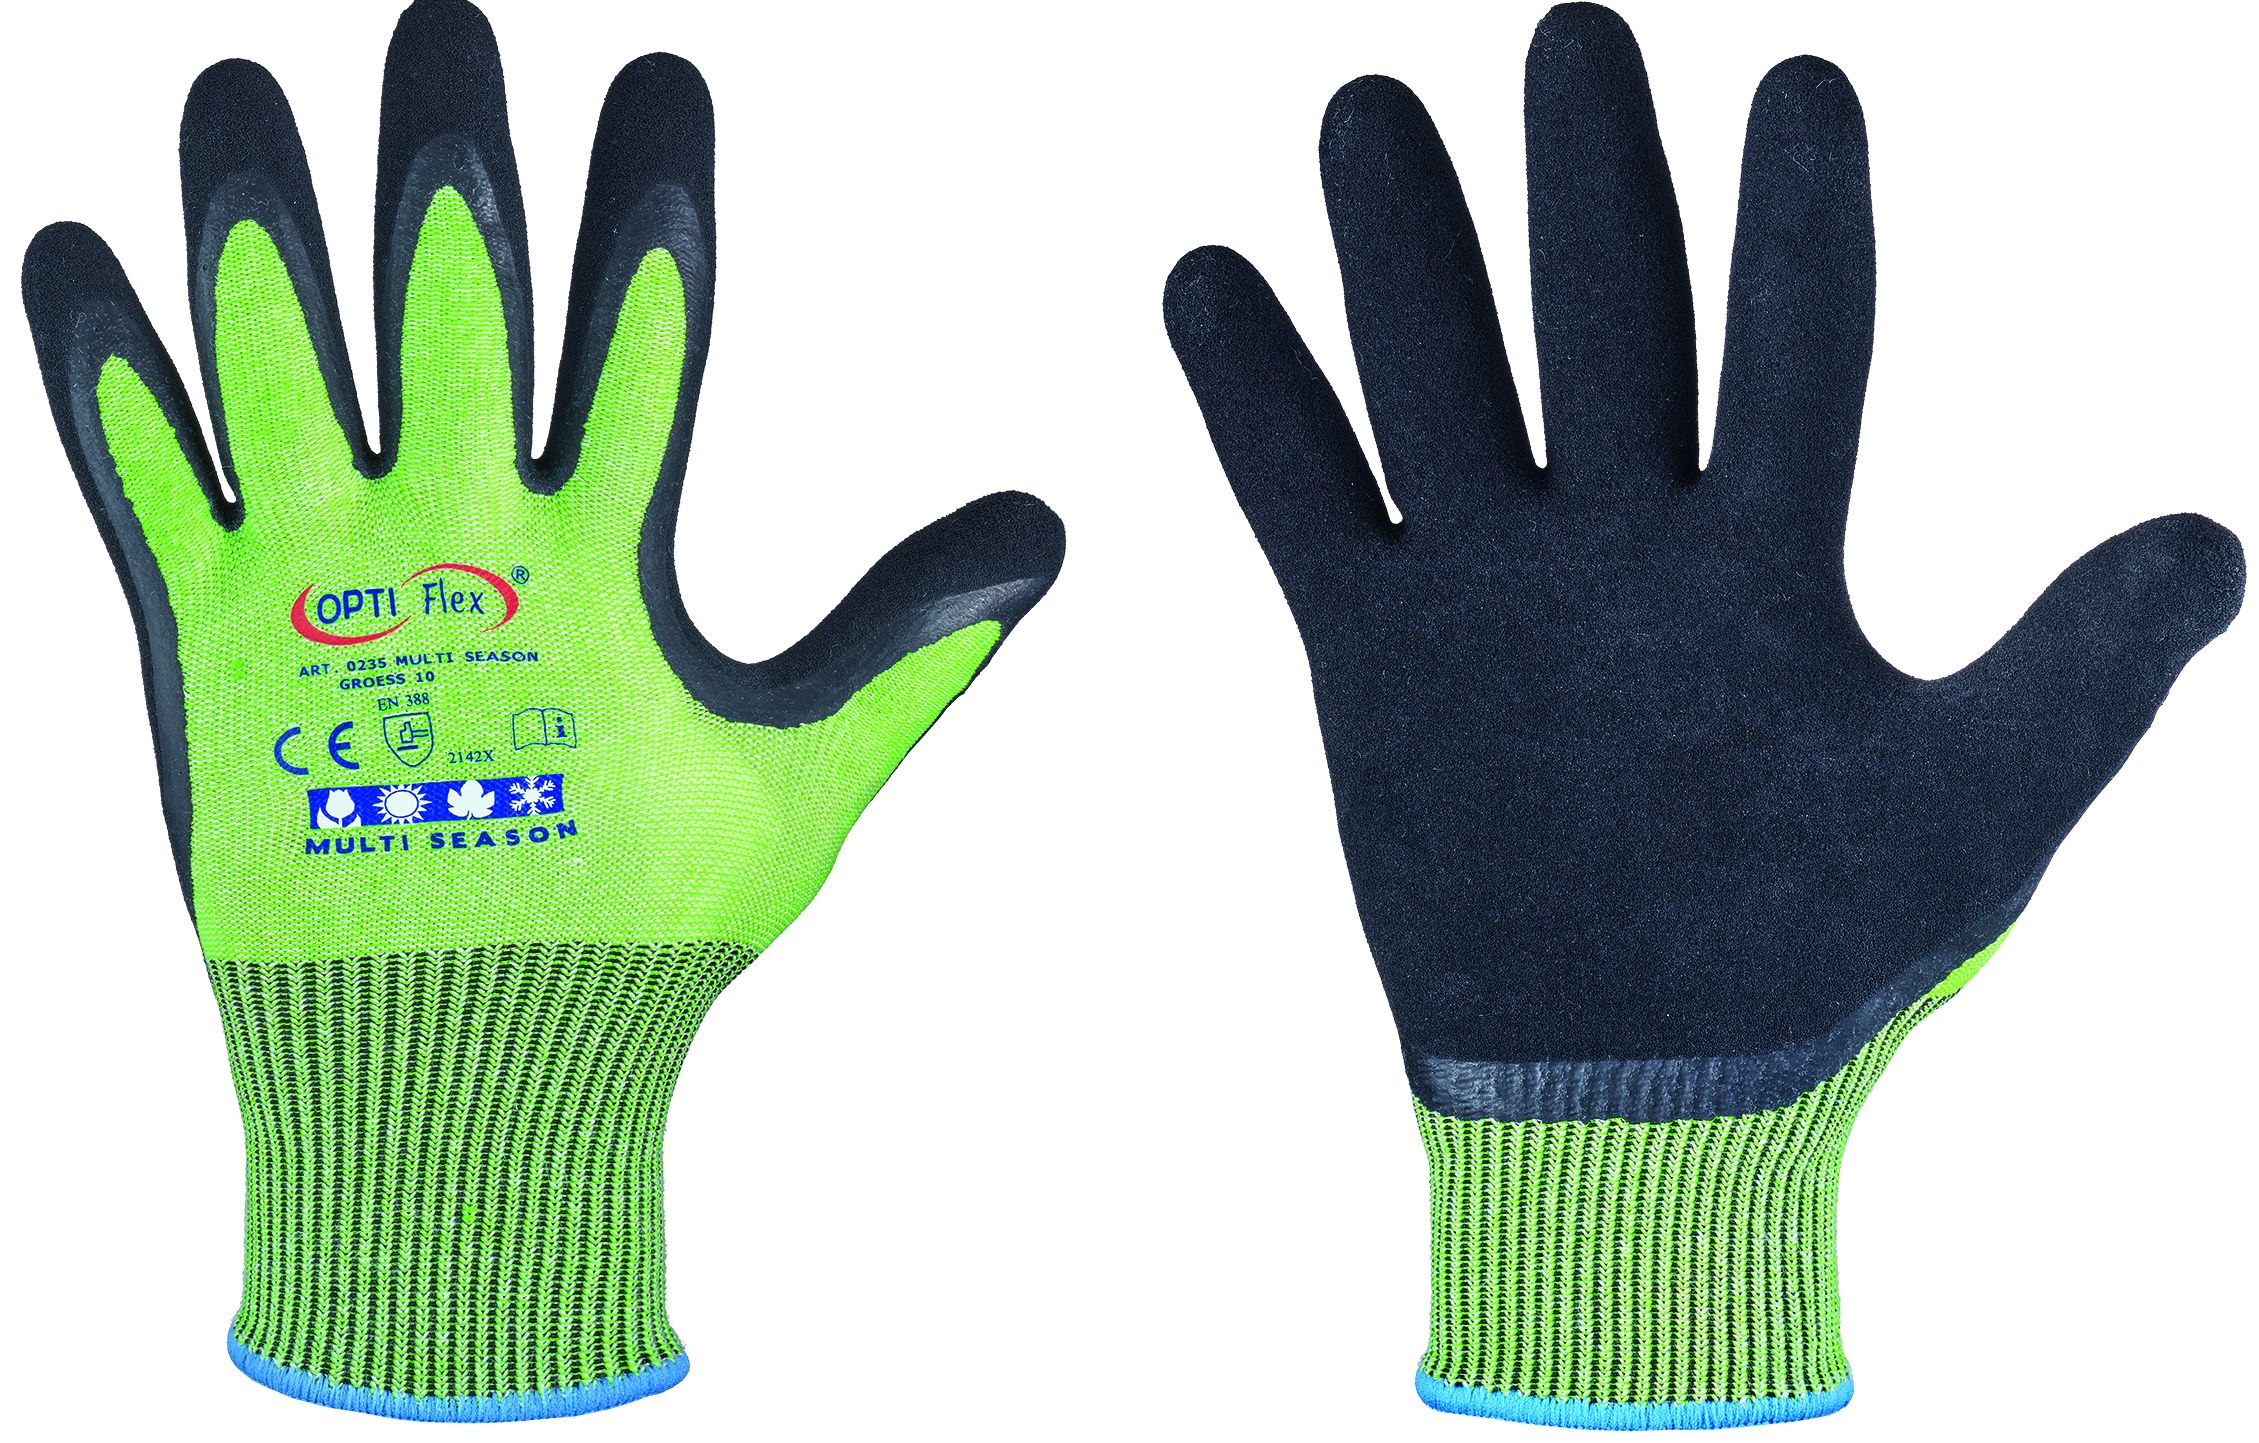 Opti Flex Multi Season Handschuh Neon Grün